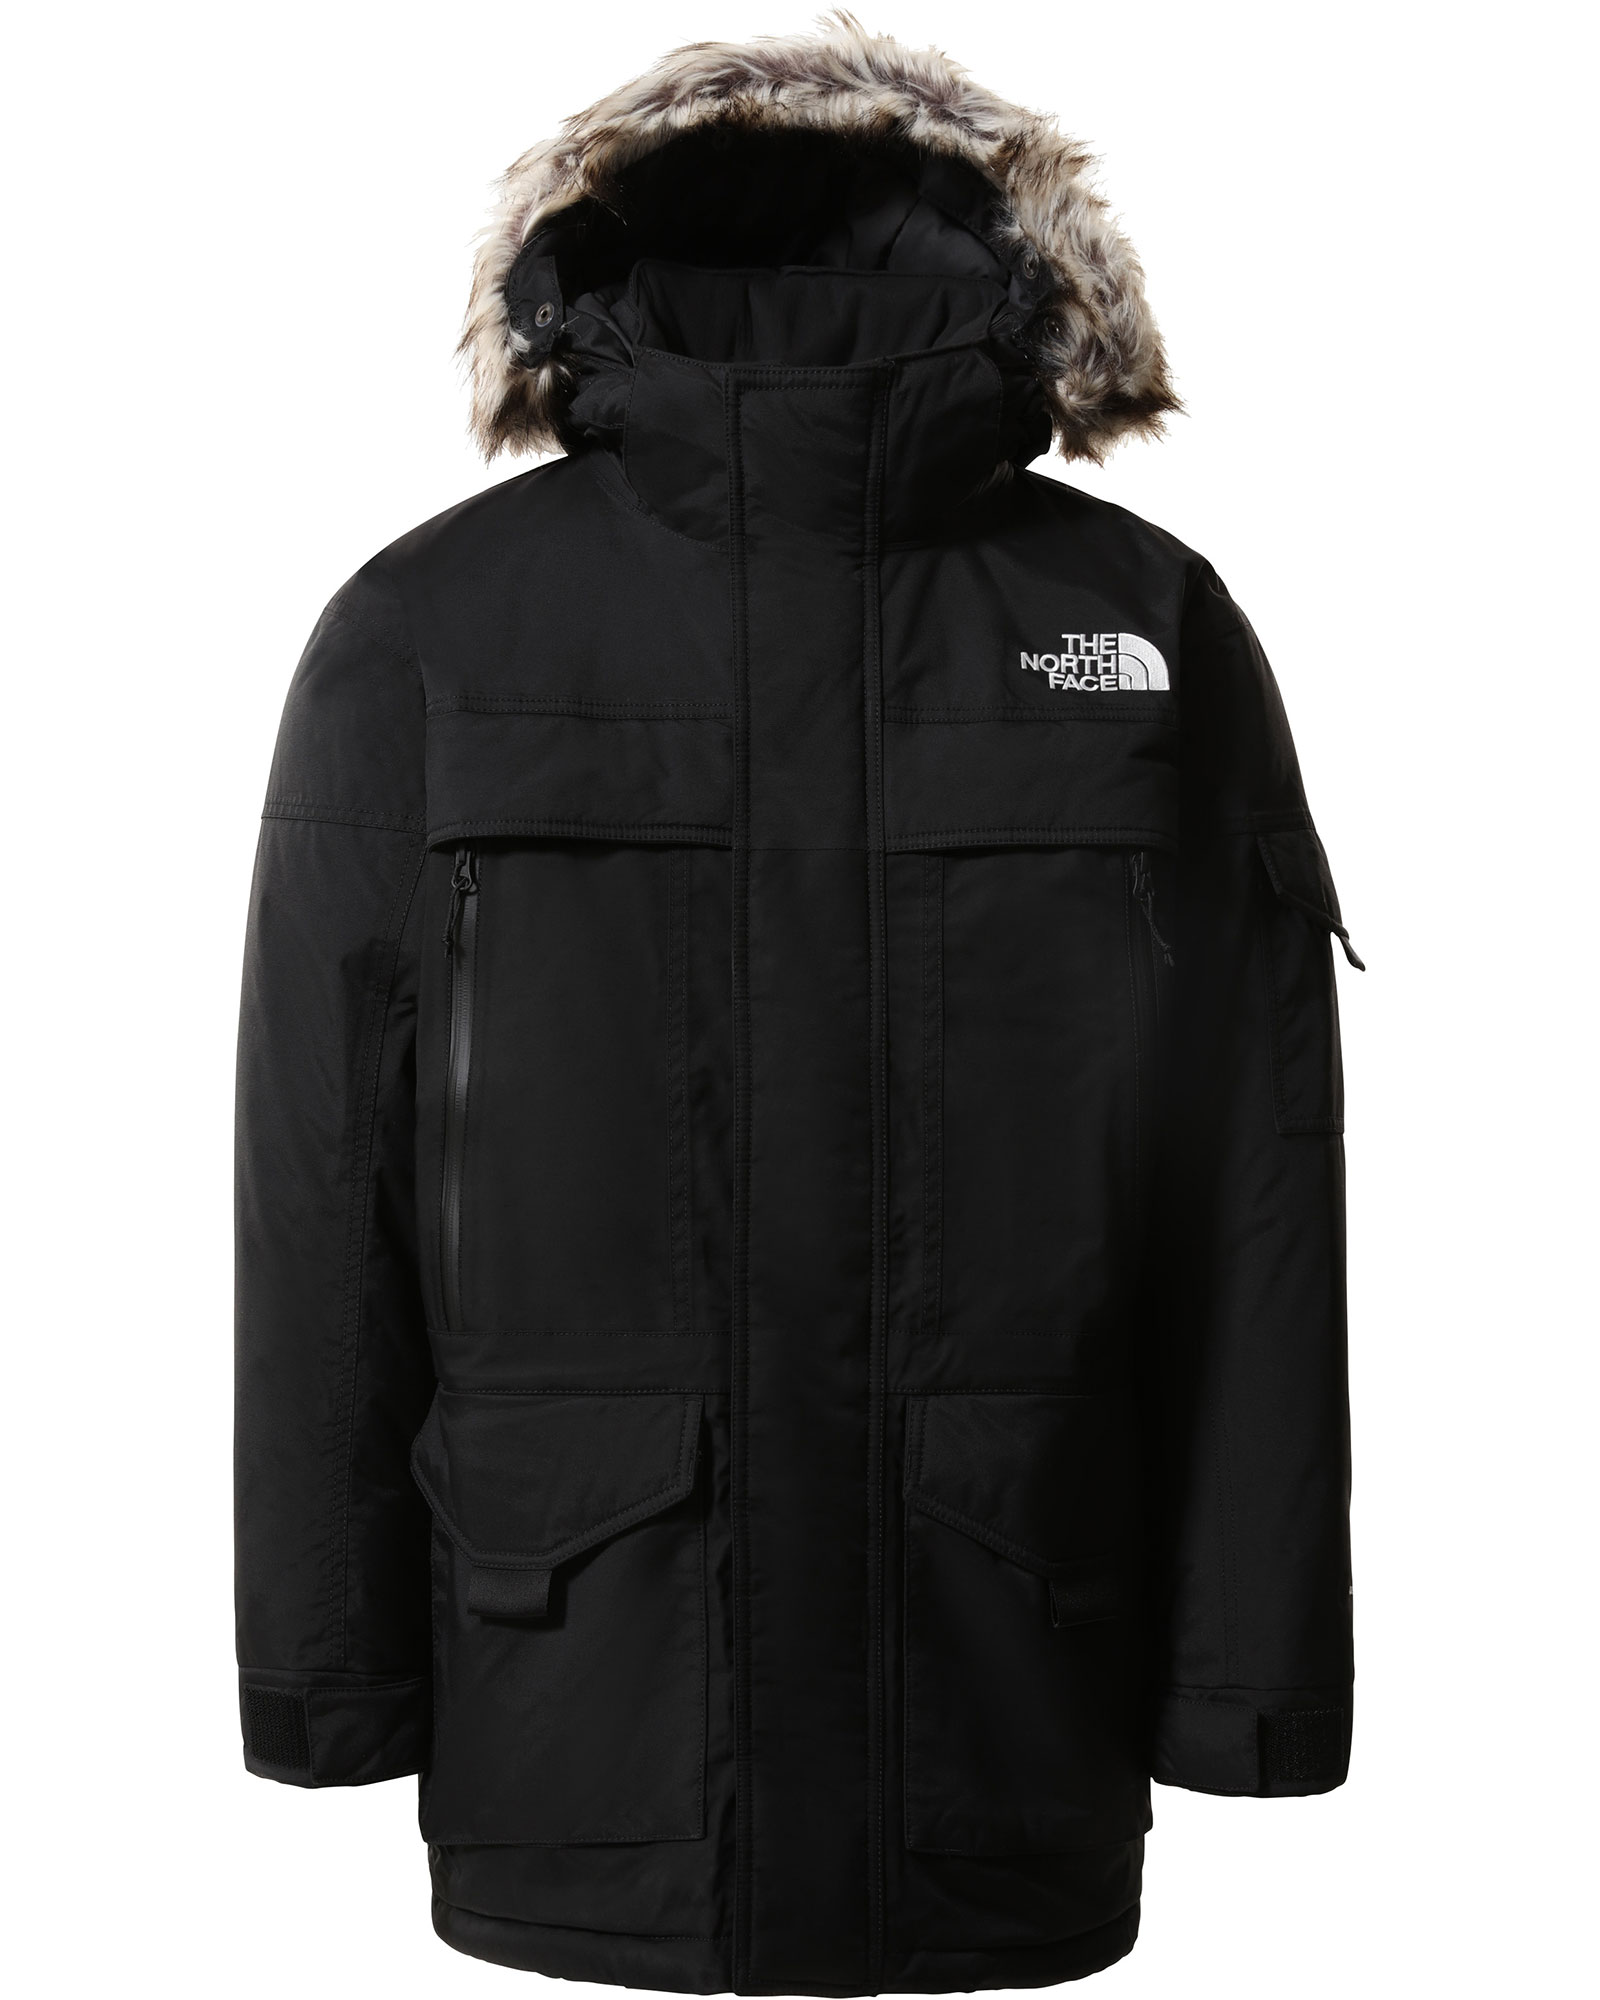 The North Face McMurdo 2 Men’s Parka Jacket - TNF Black/TNF White Logo XS